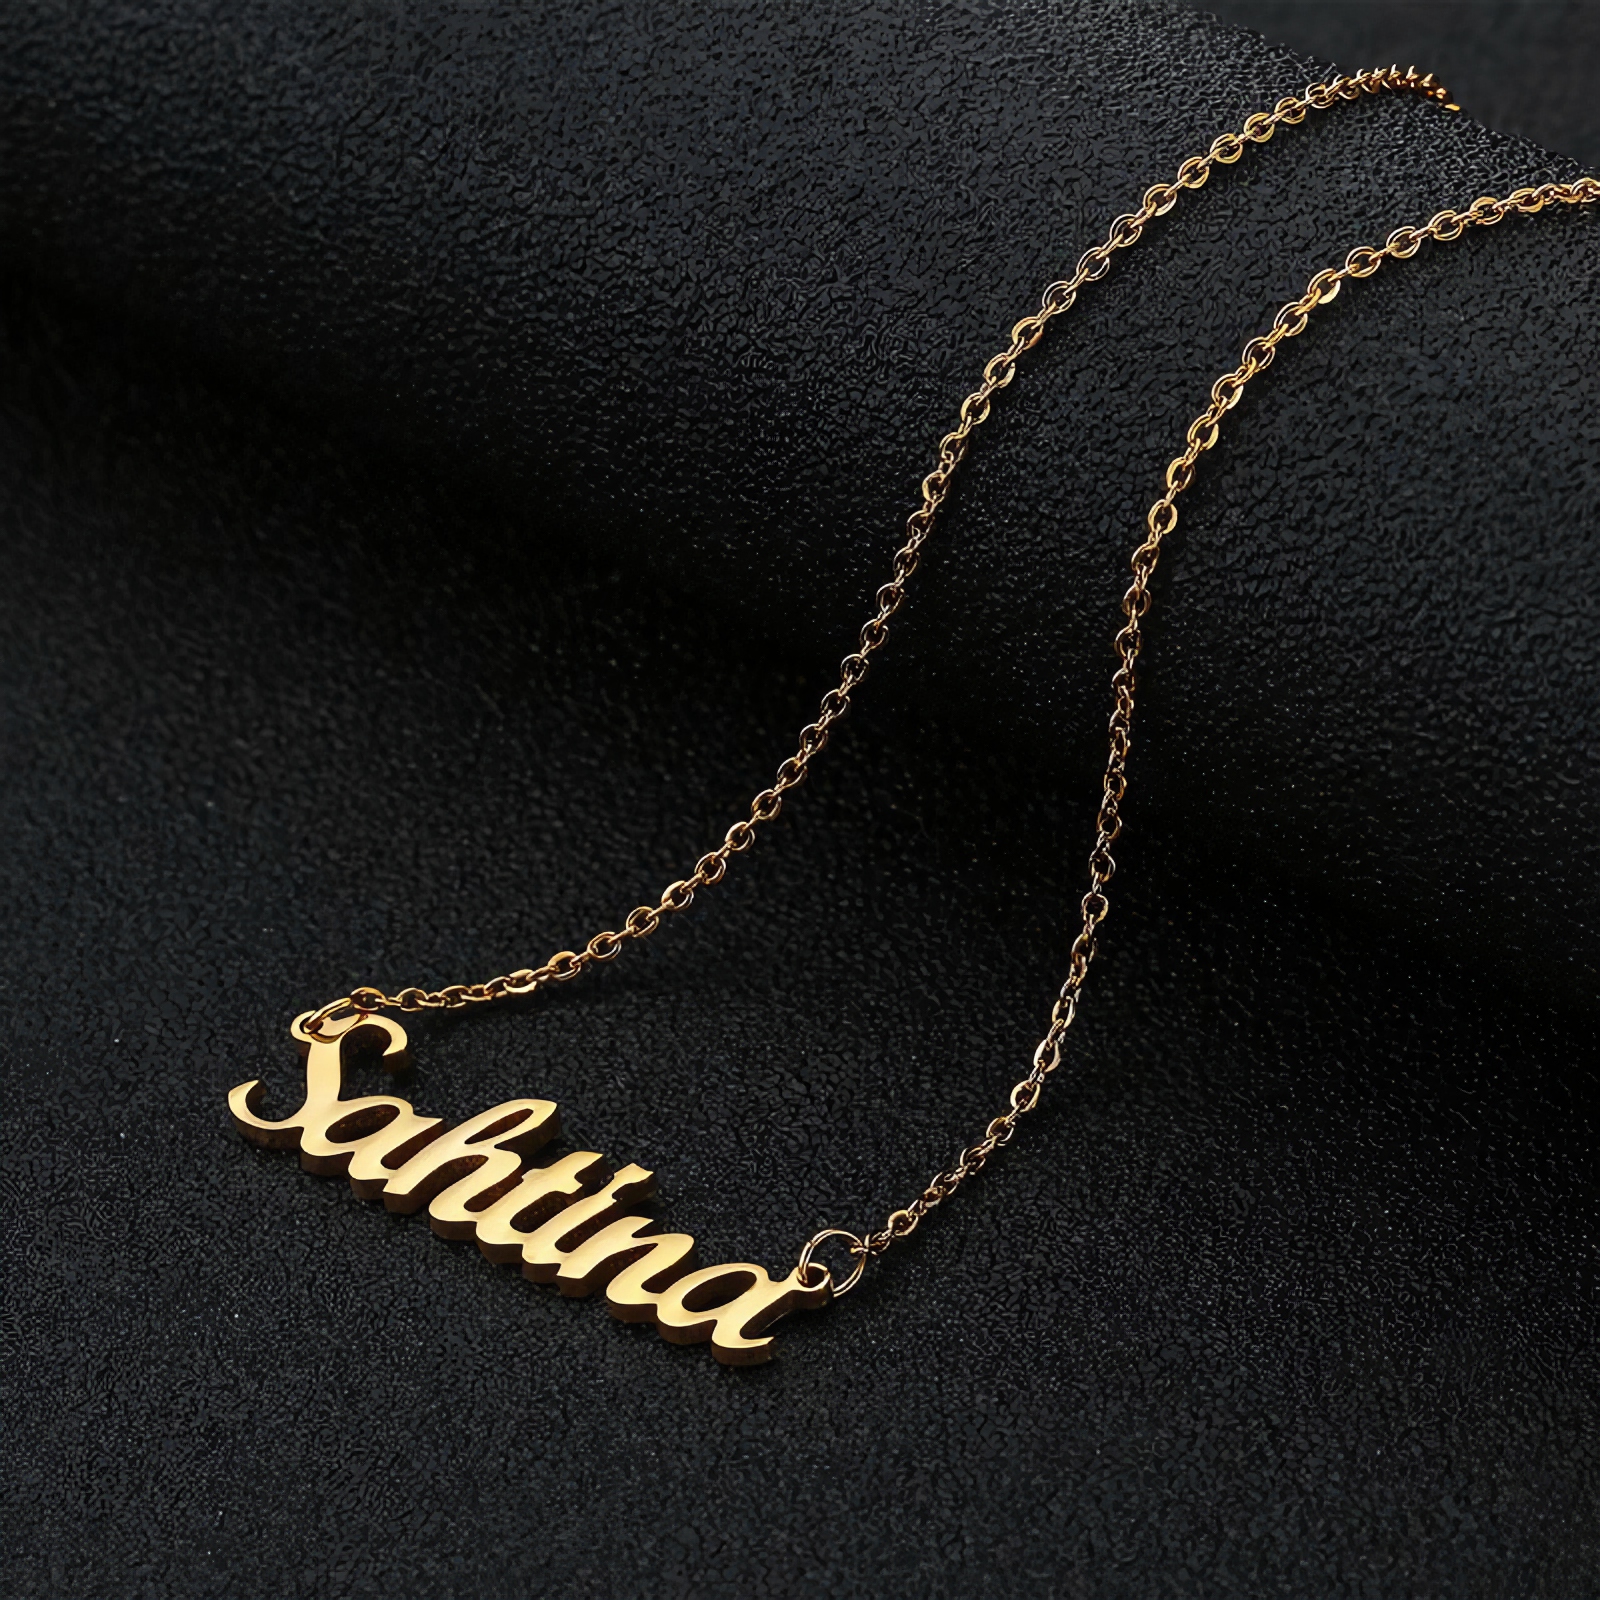 Customized Name Pendant Necklace